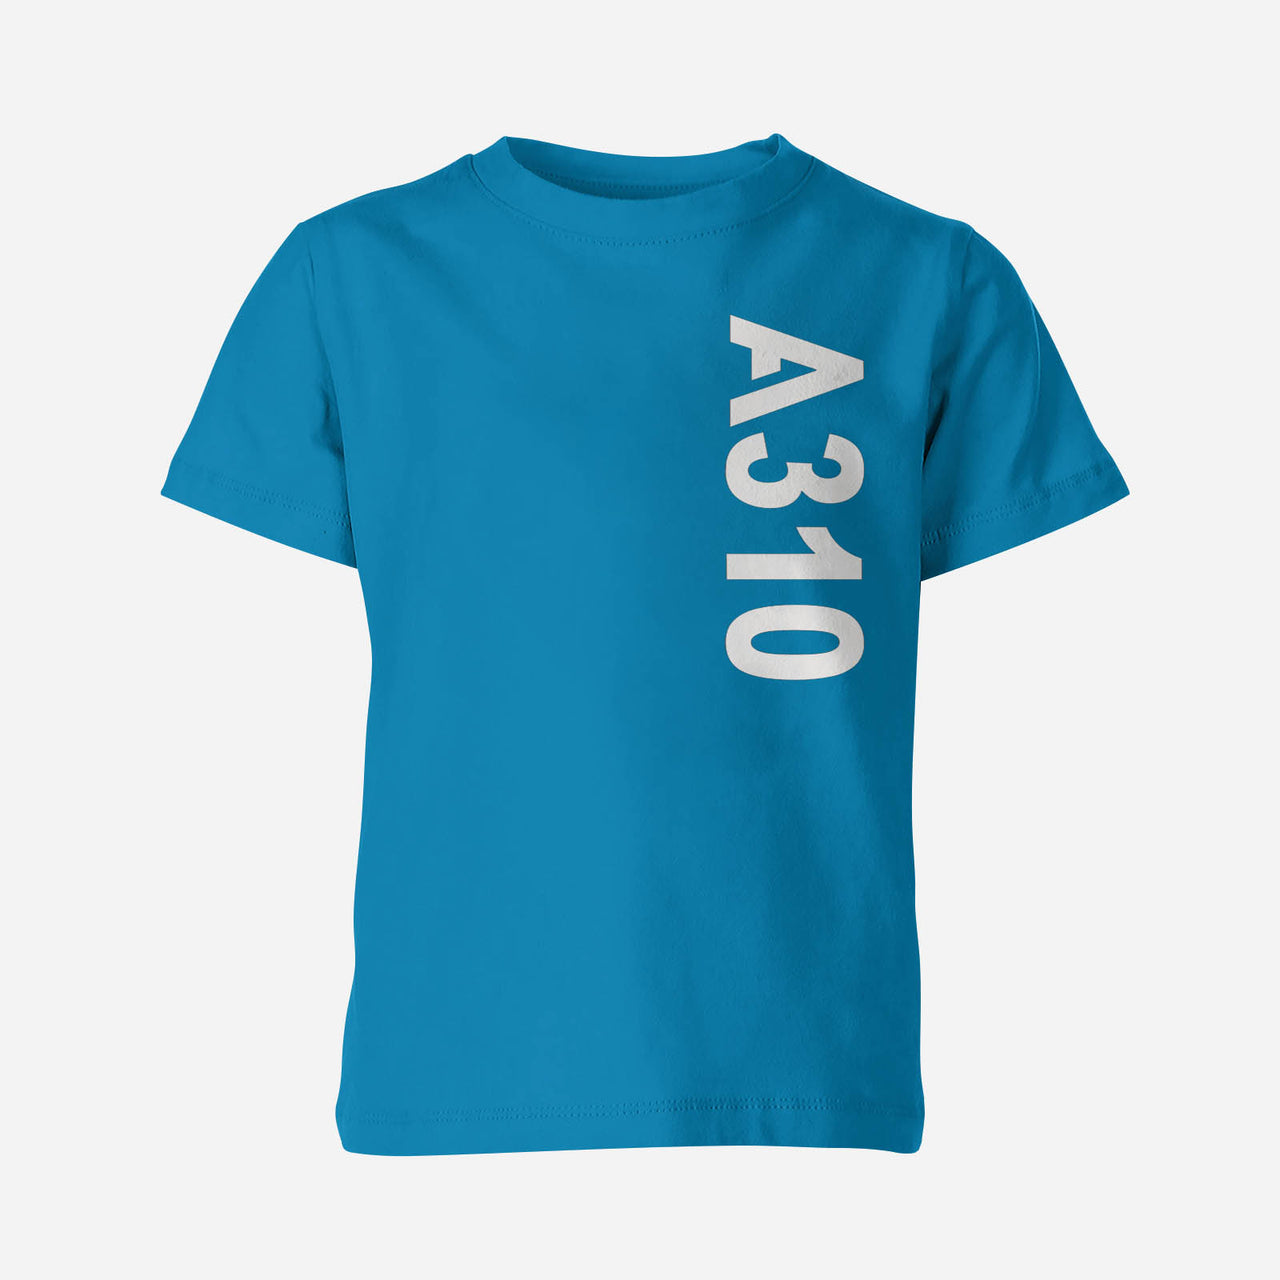 A310 Side Text Designed Children T-Shirts